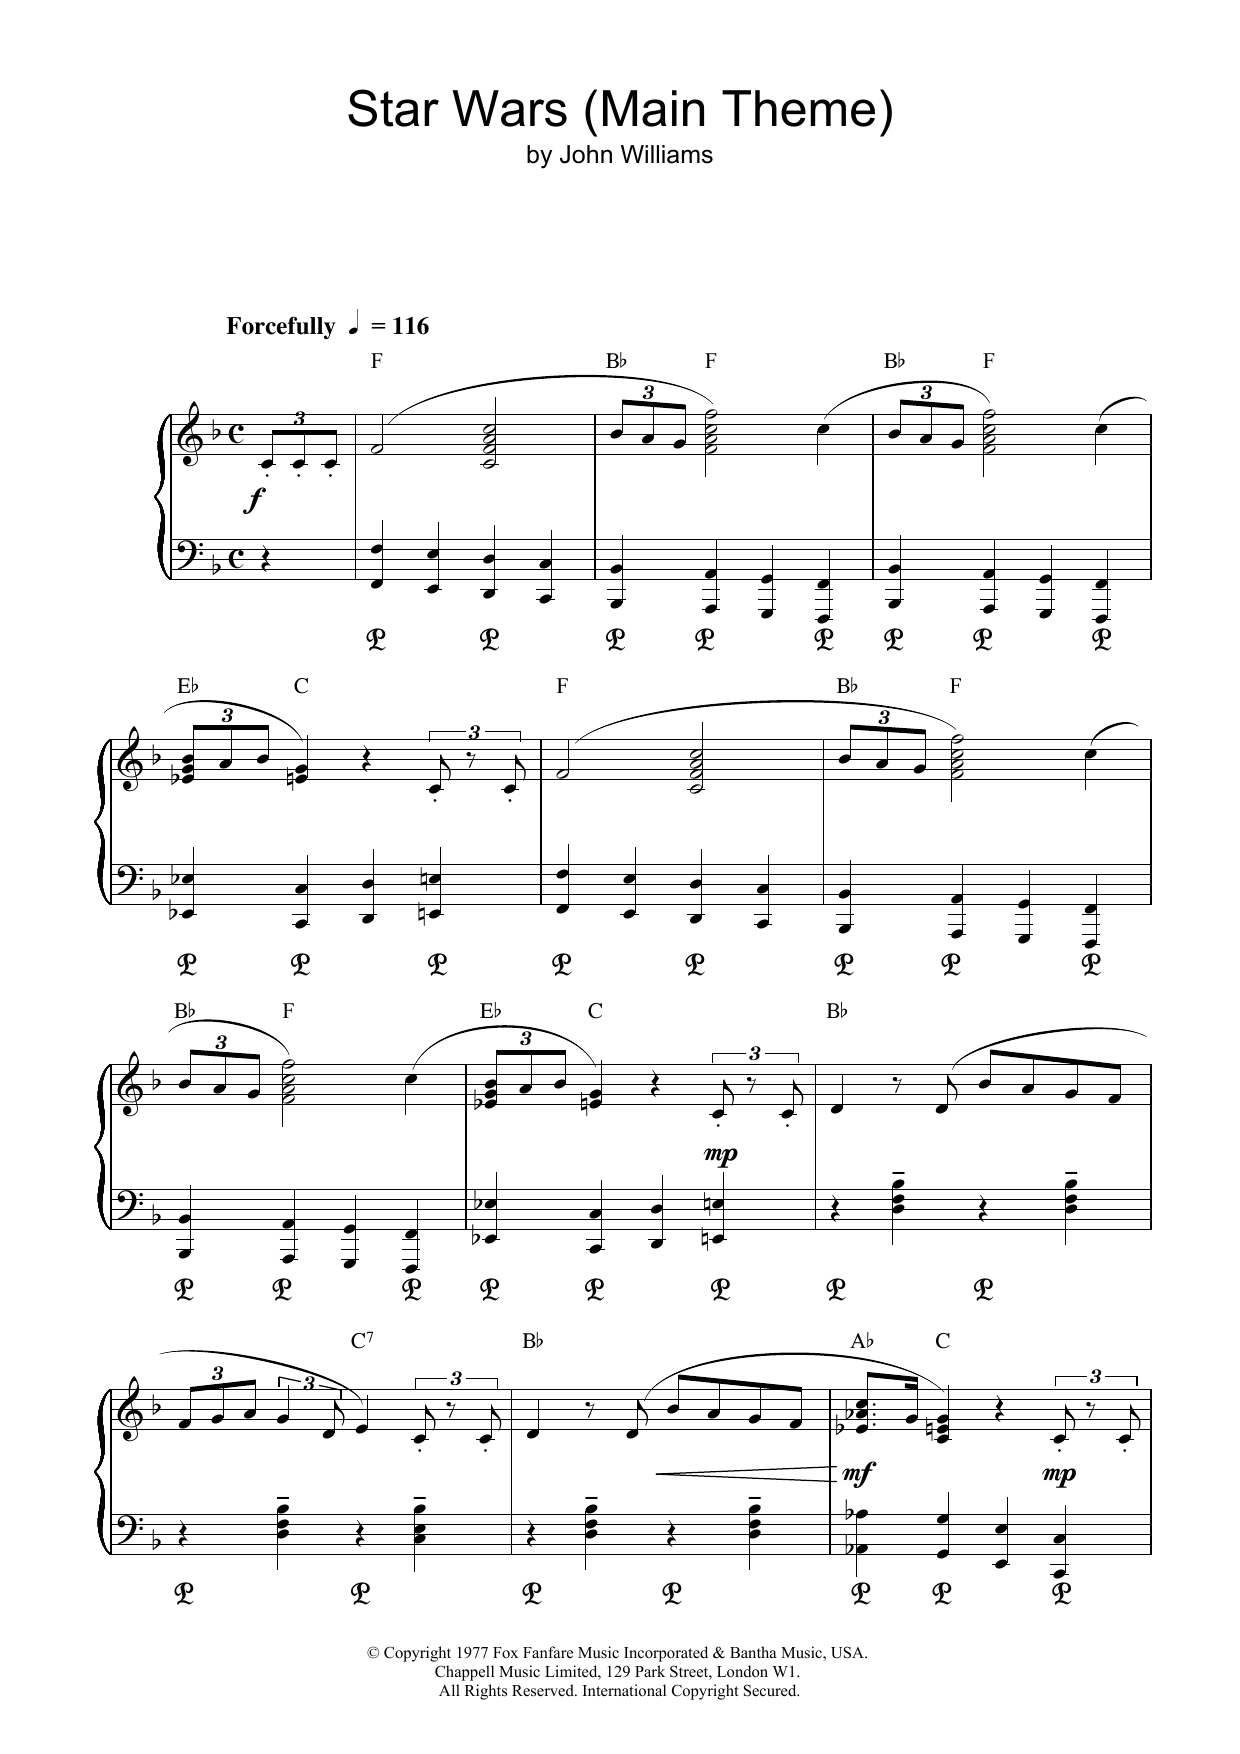 John Williams Star Wars (Main Theme) Sheet Music Notes & Chords for Piano - Download or Print PDF